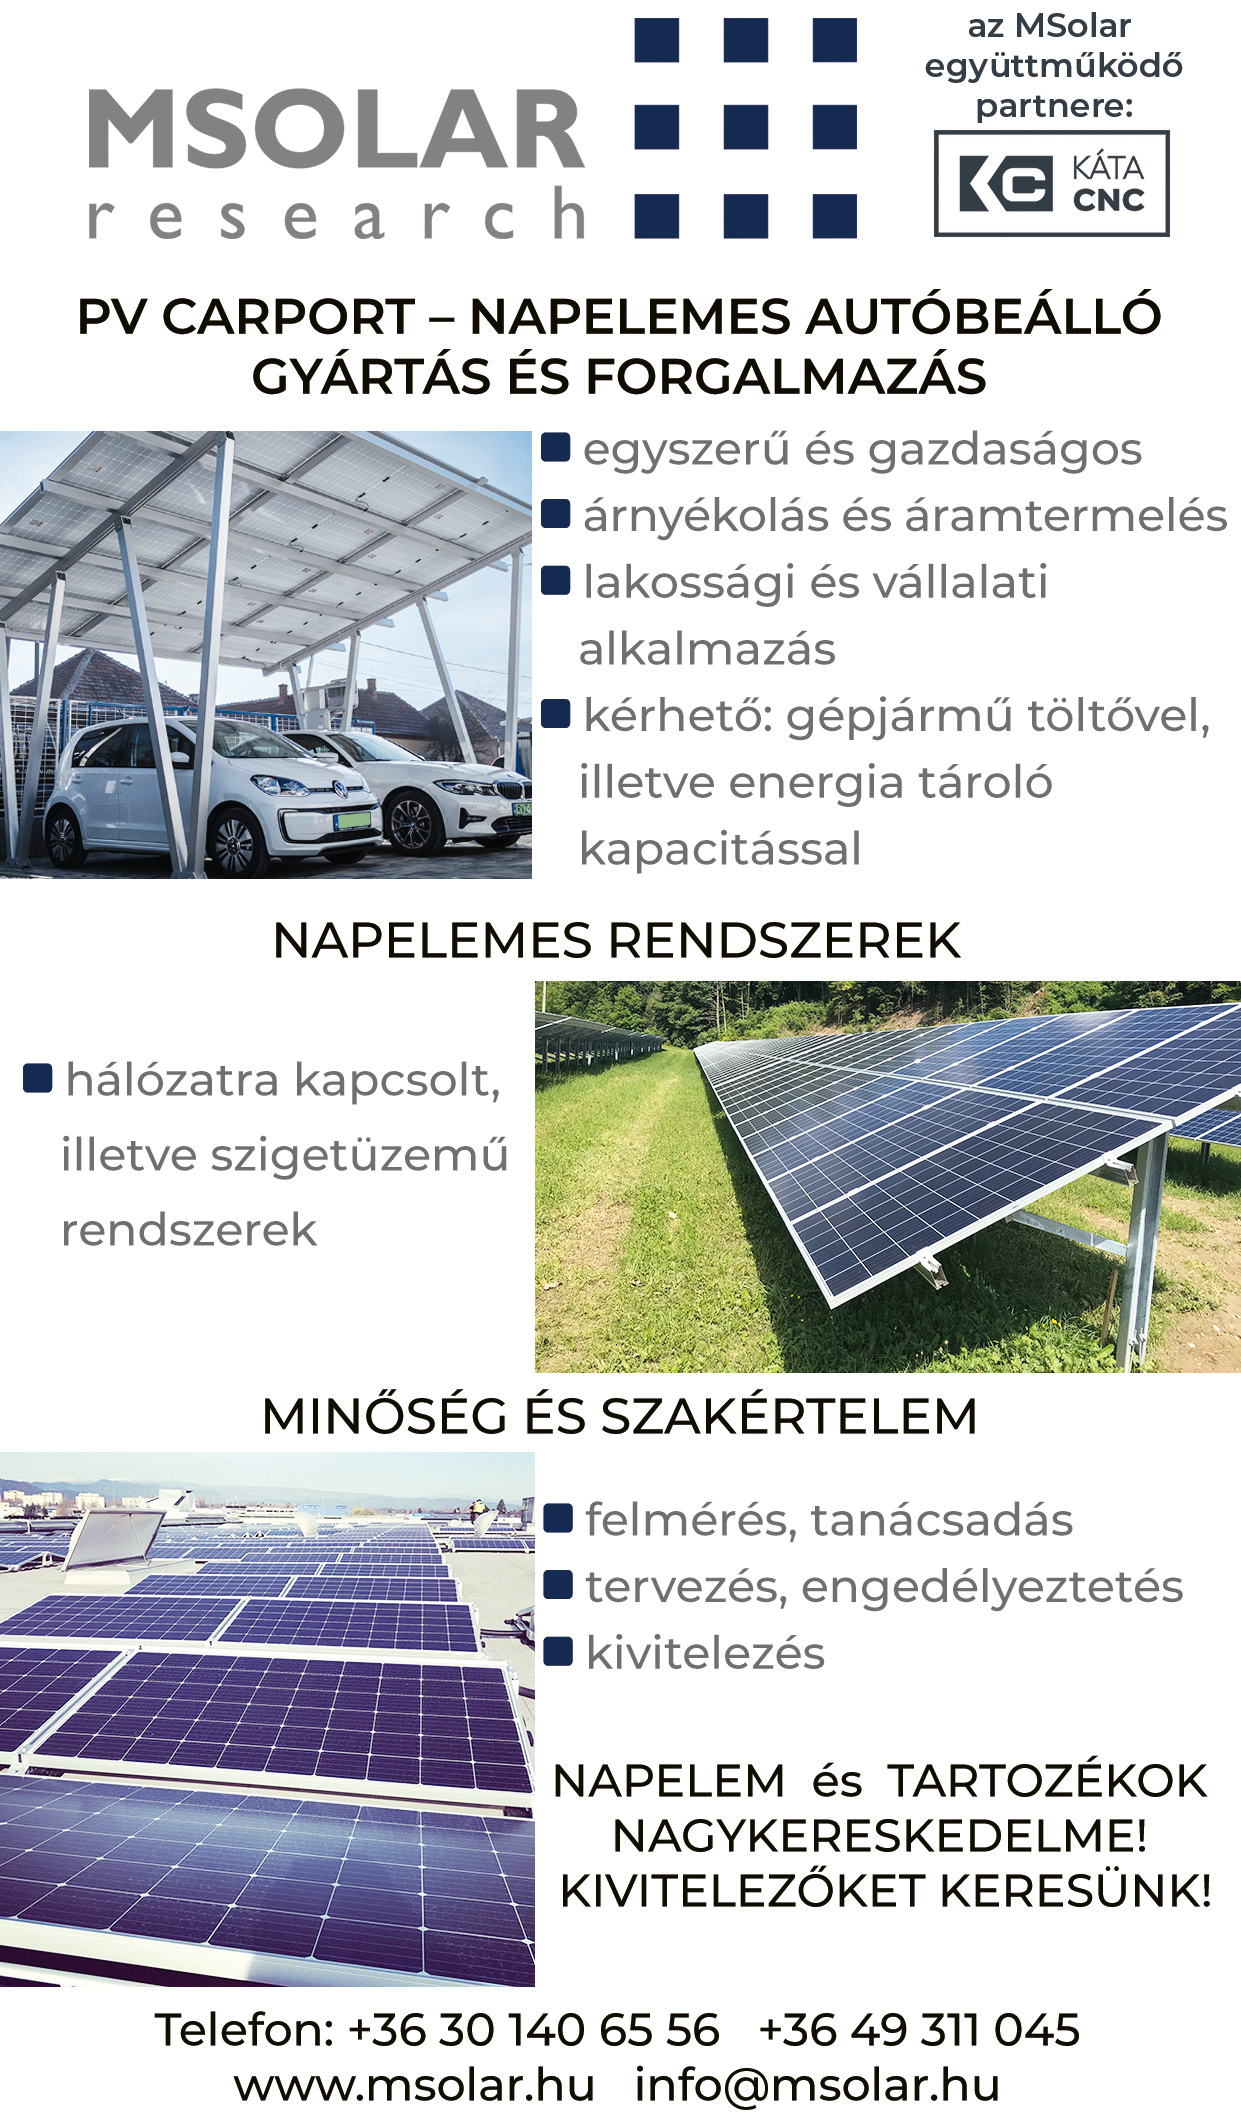 Solar-Pv Carport Budapest Pest county